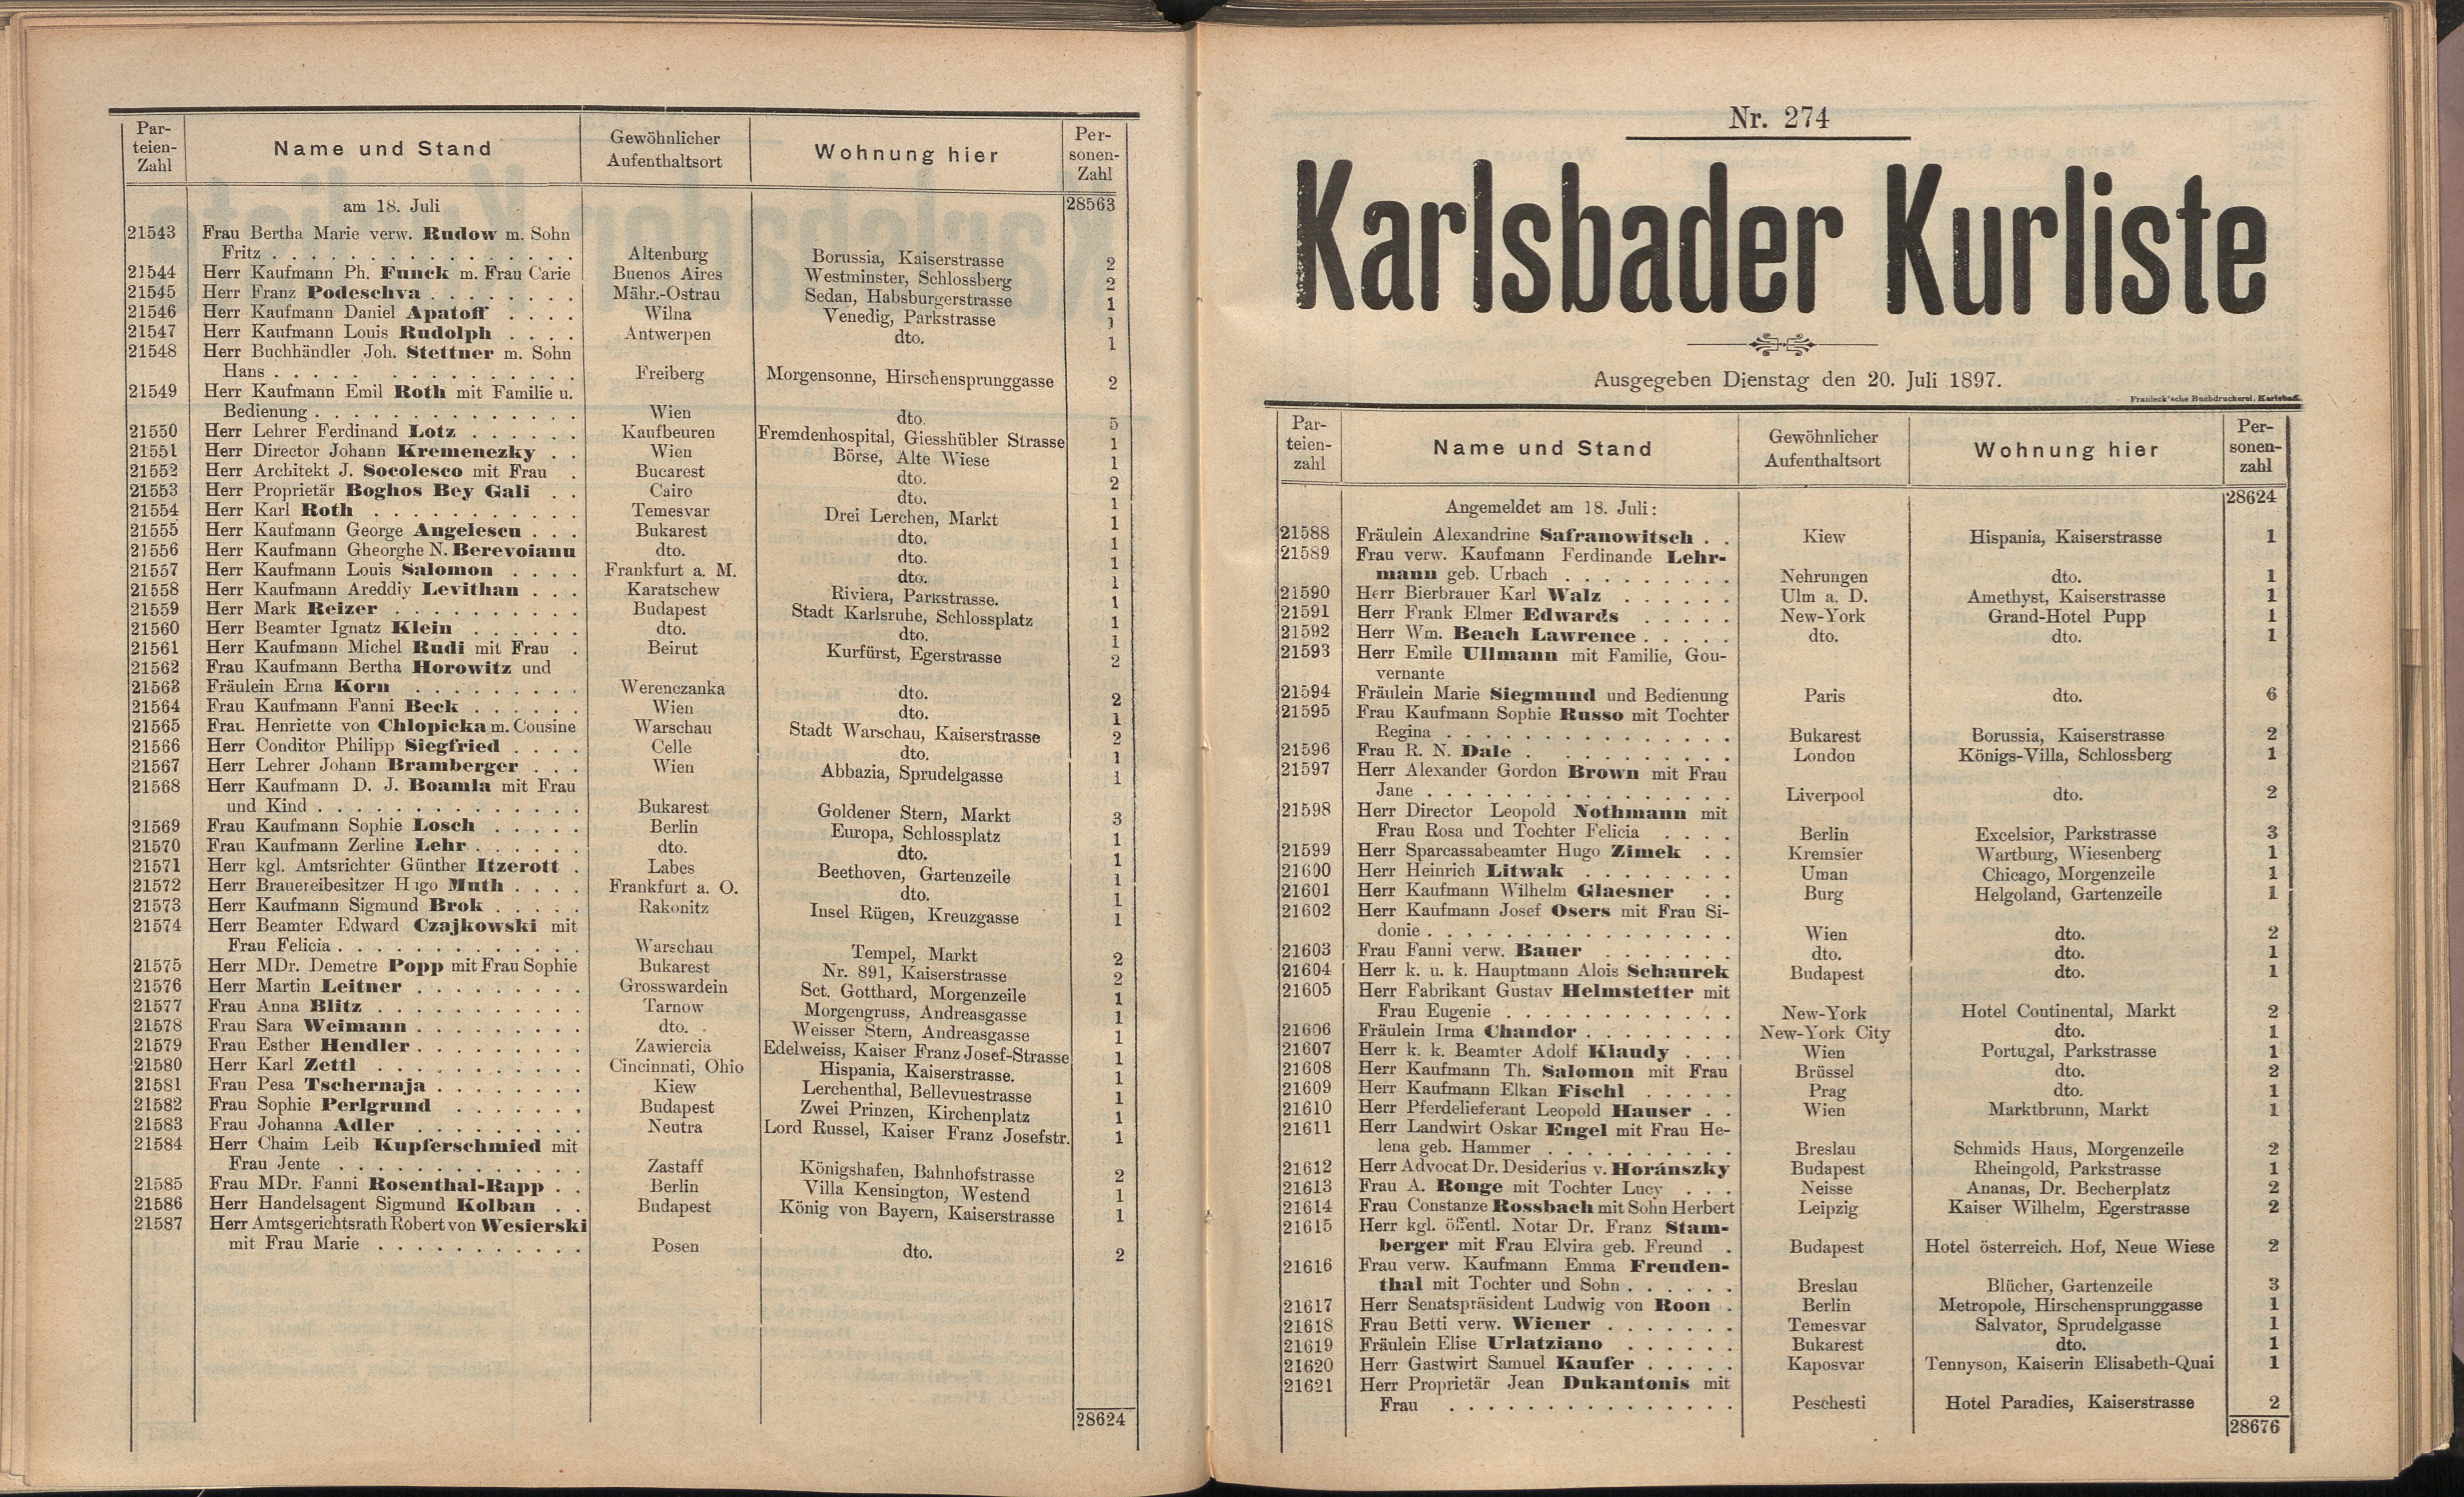 293. soap-kv_knihovna_karlsbader-kurliste-1897_2940